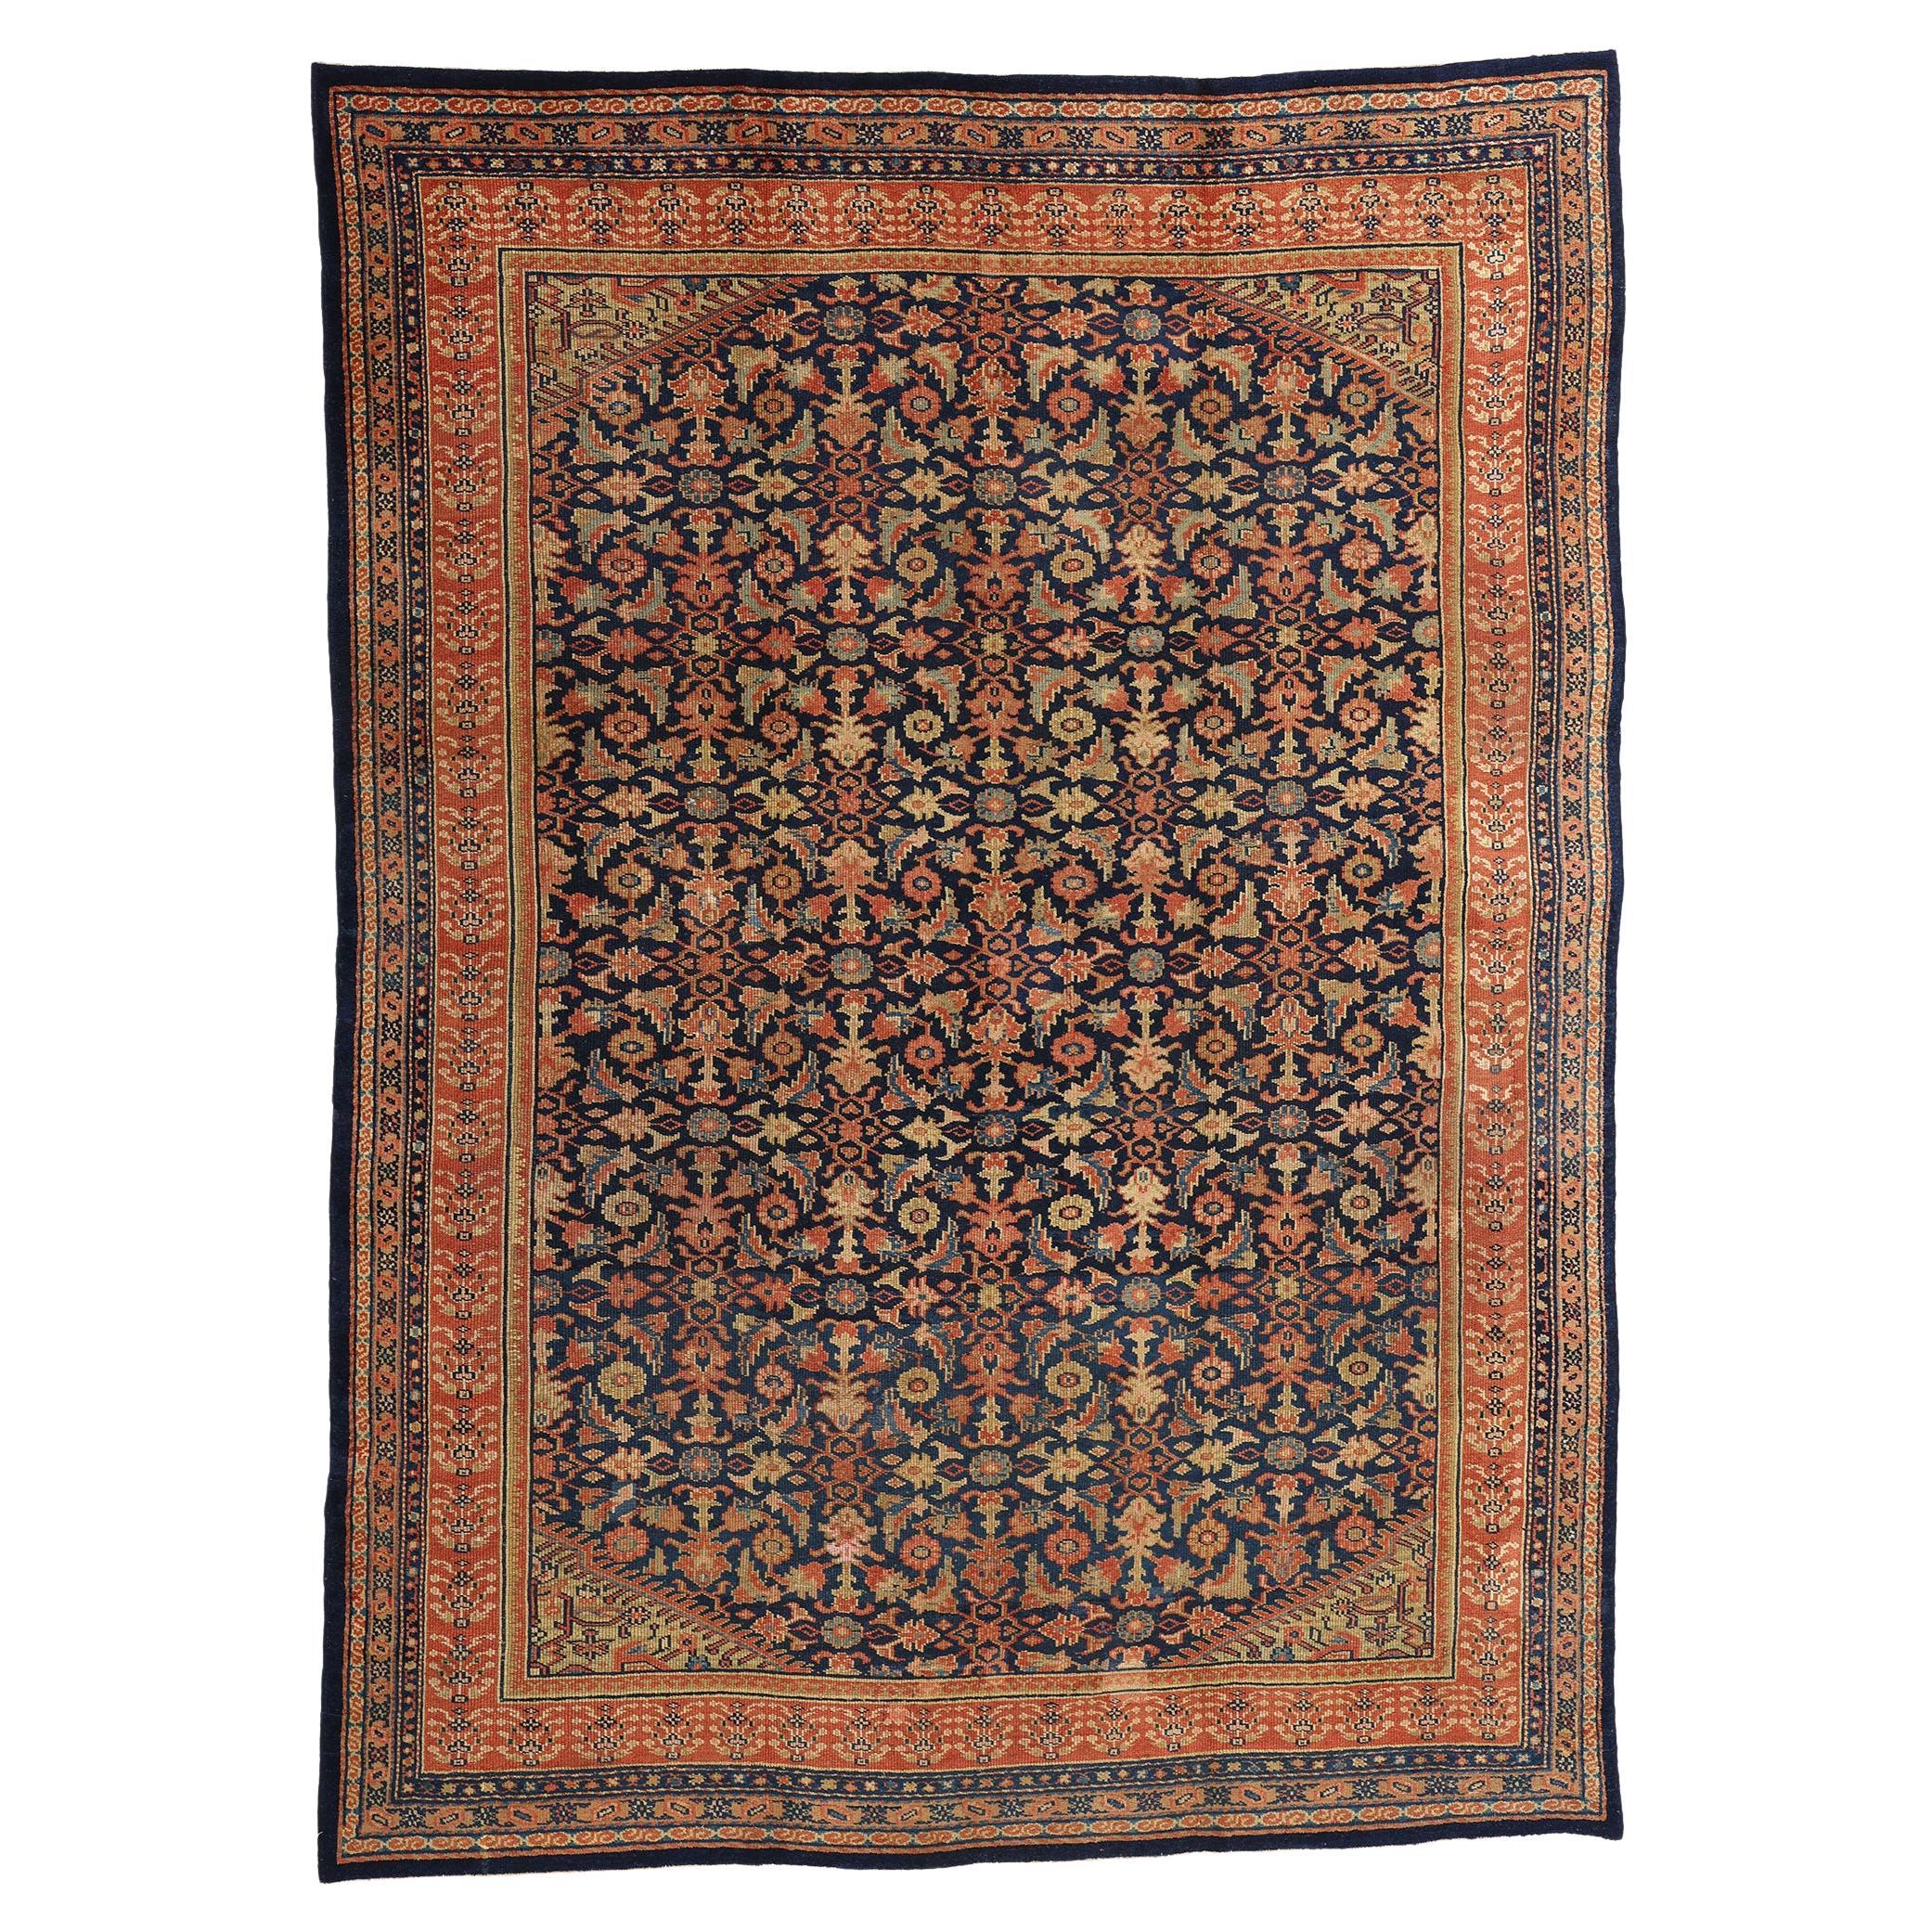 Late 19th Century Distressed Antique Navy Blue Persian Kurdish Carpet For Sale